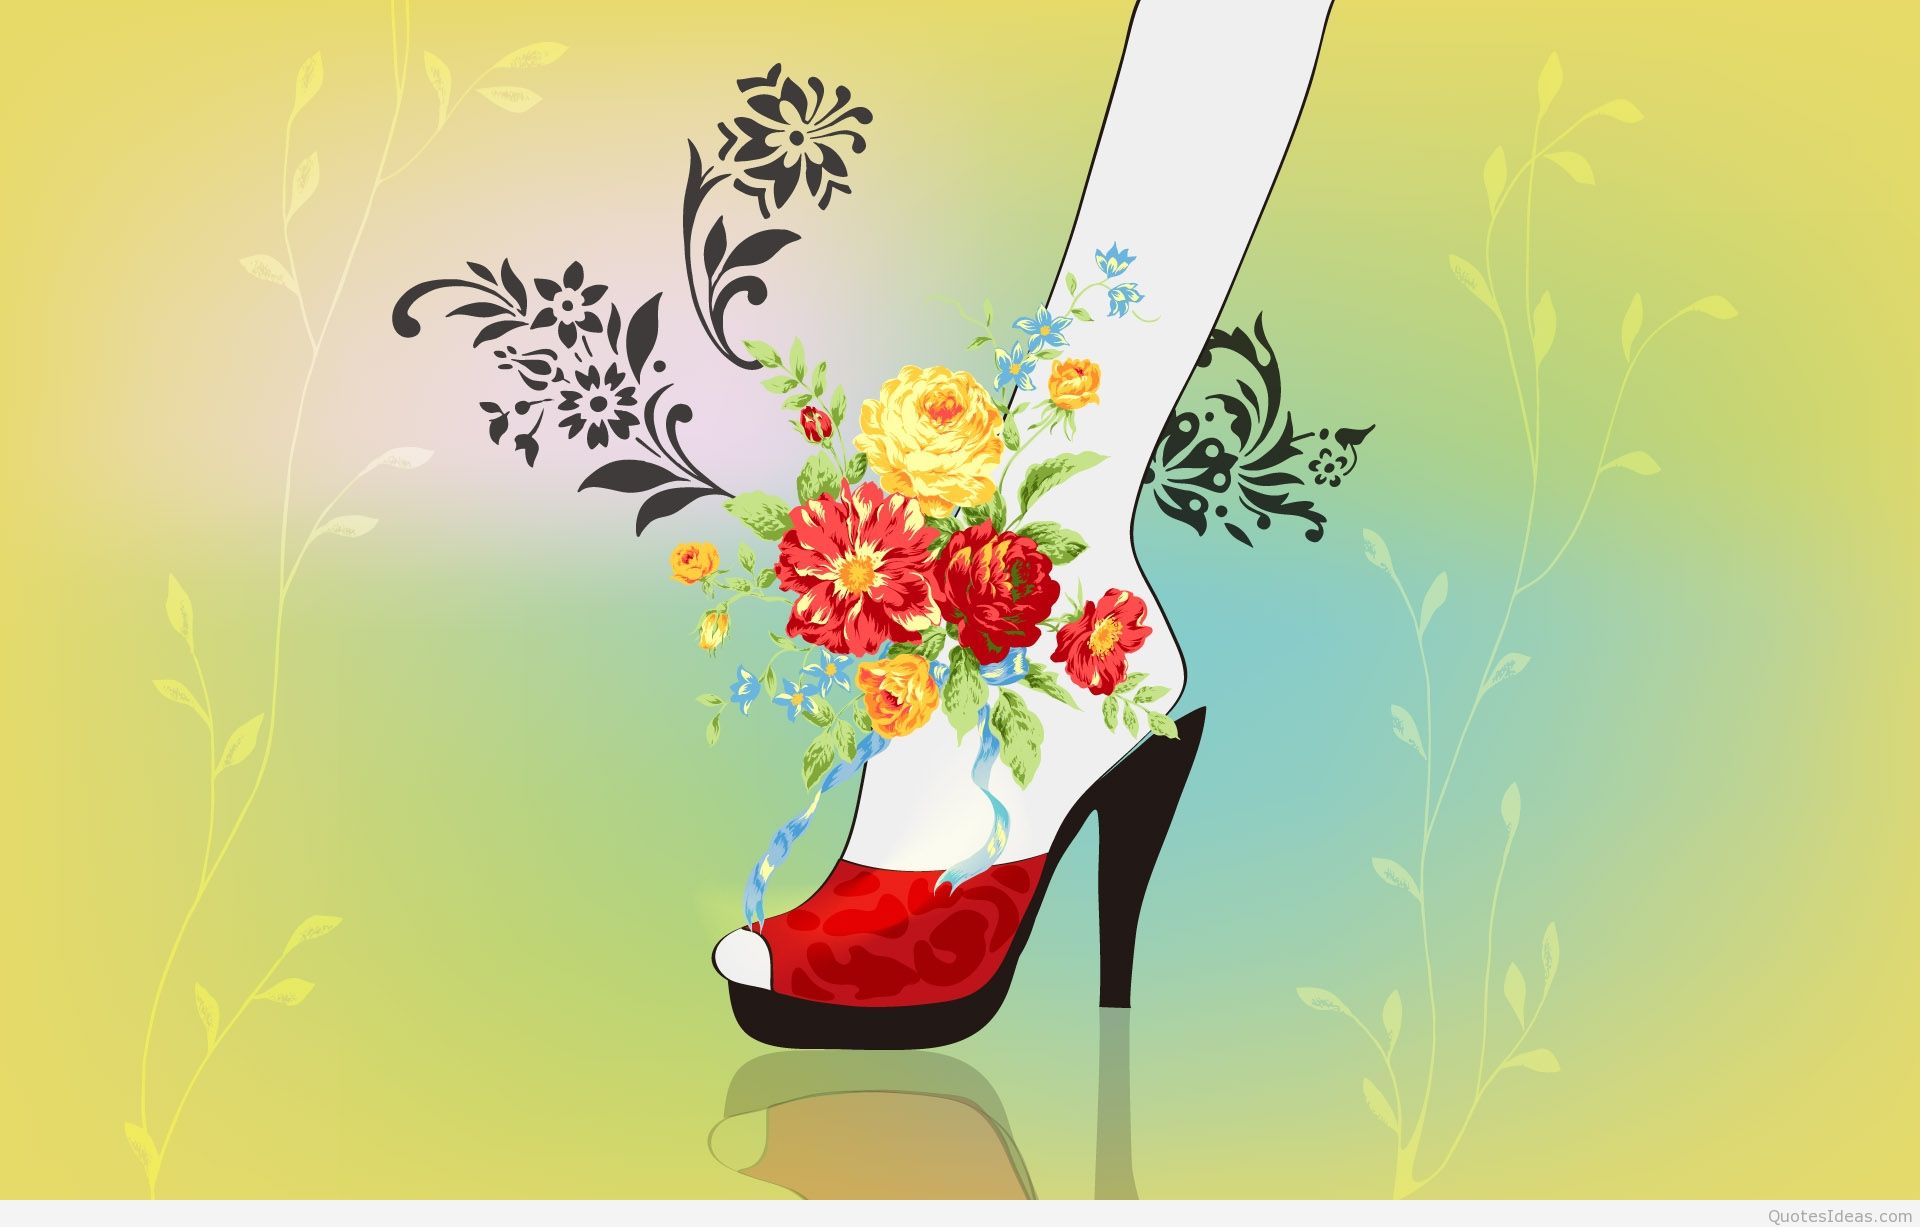 womens day wallpaper,footwear,illustration,graphic design,font,floral design